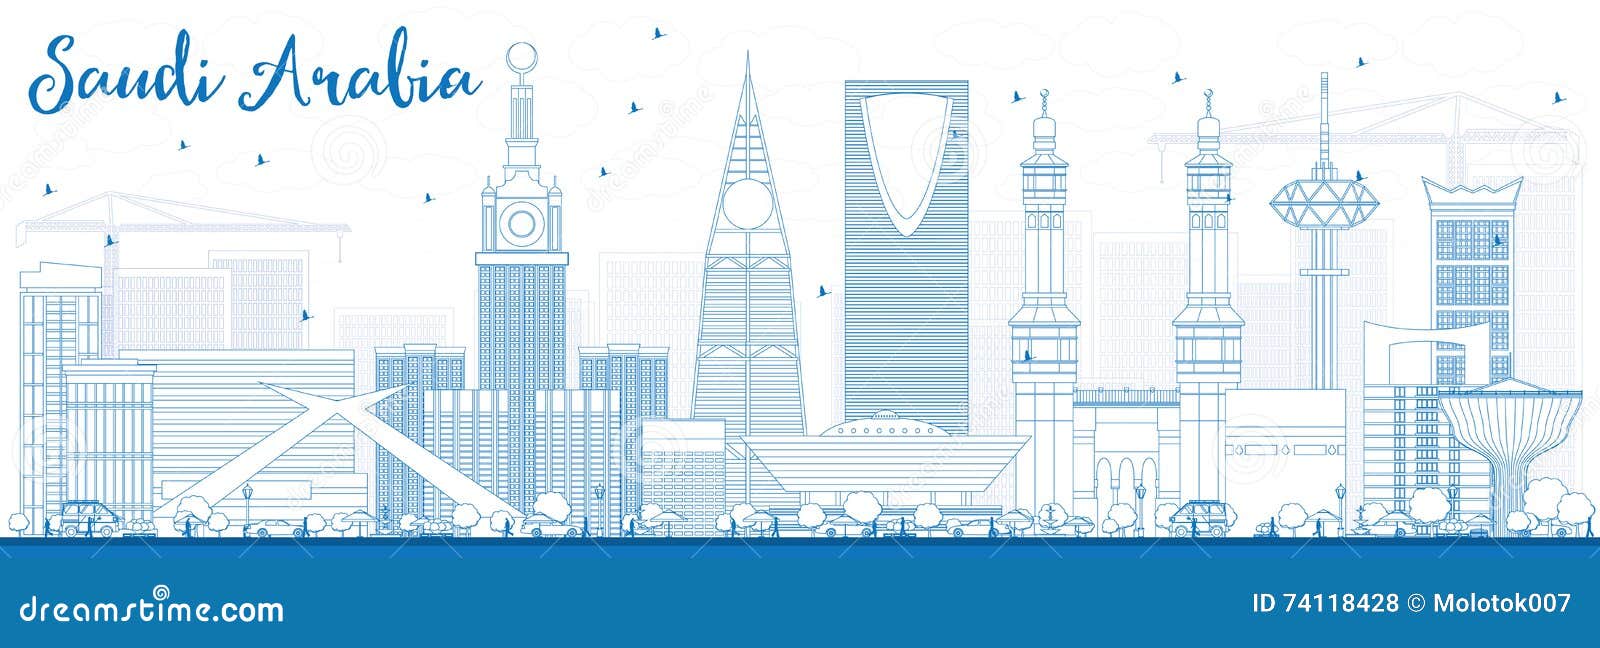 outline saudi arabia skyline with blue landmarks.